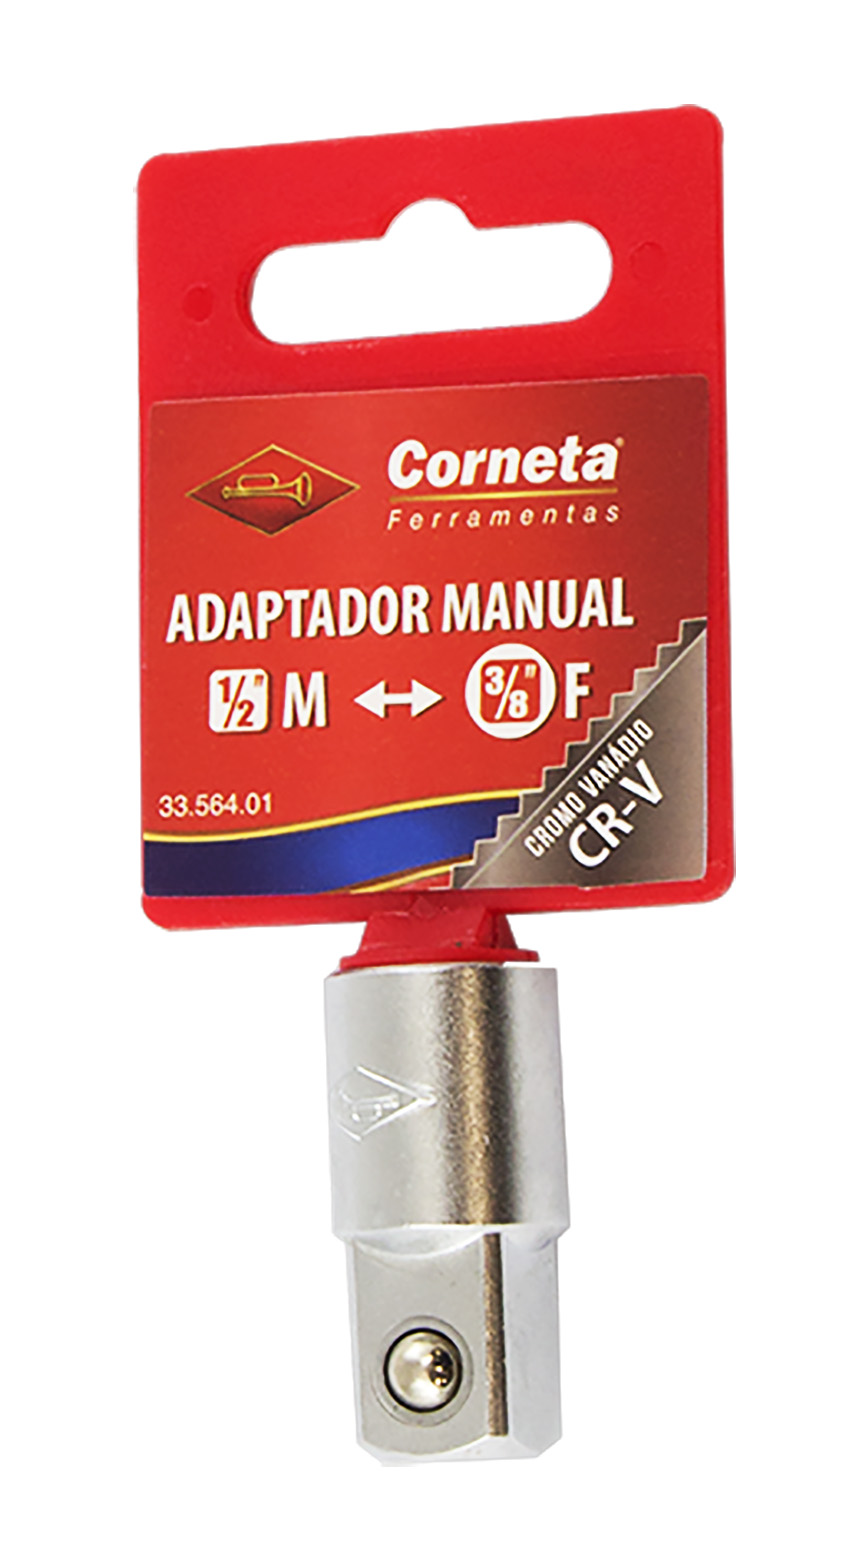 Adaptador Corneta 3356401 M1/2 X F3/8